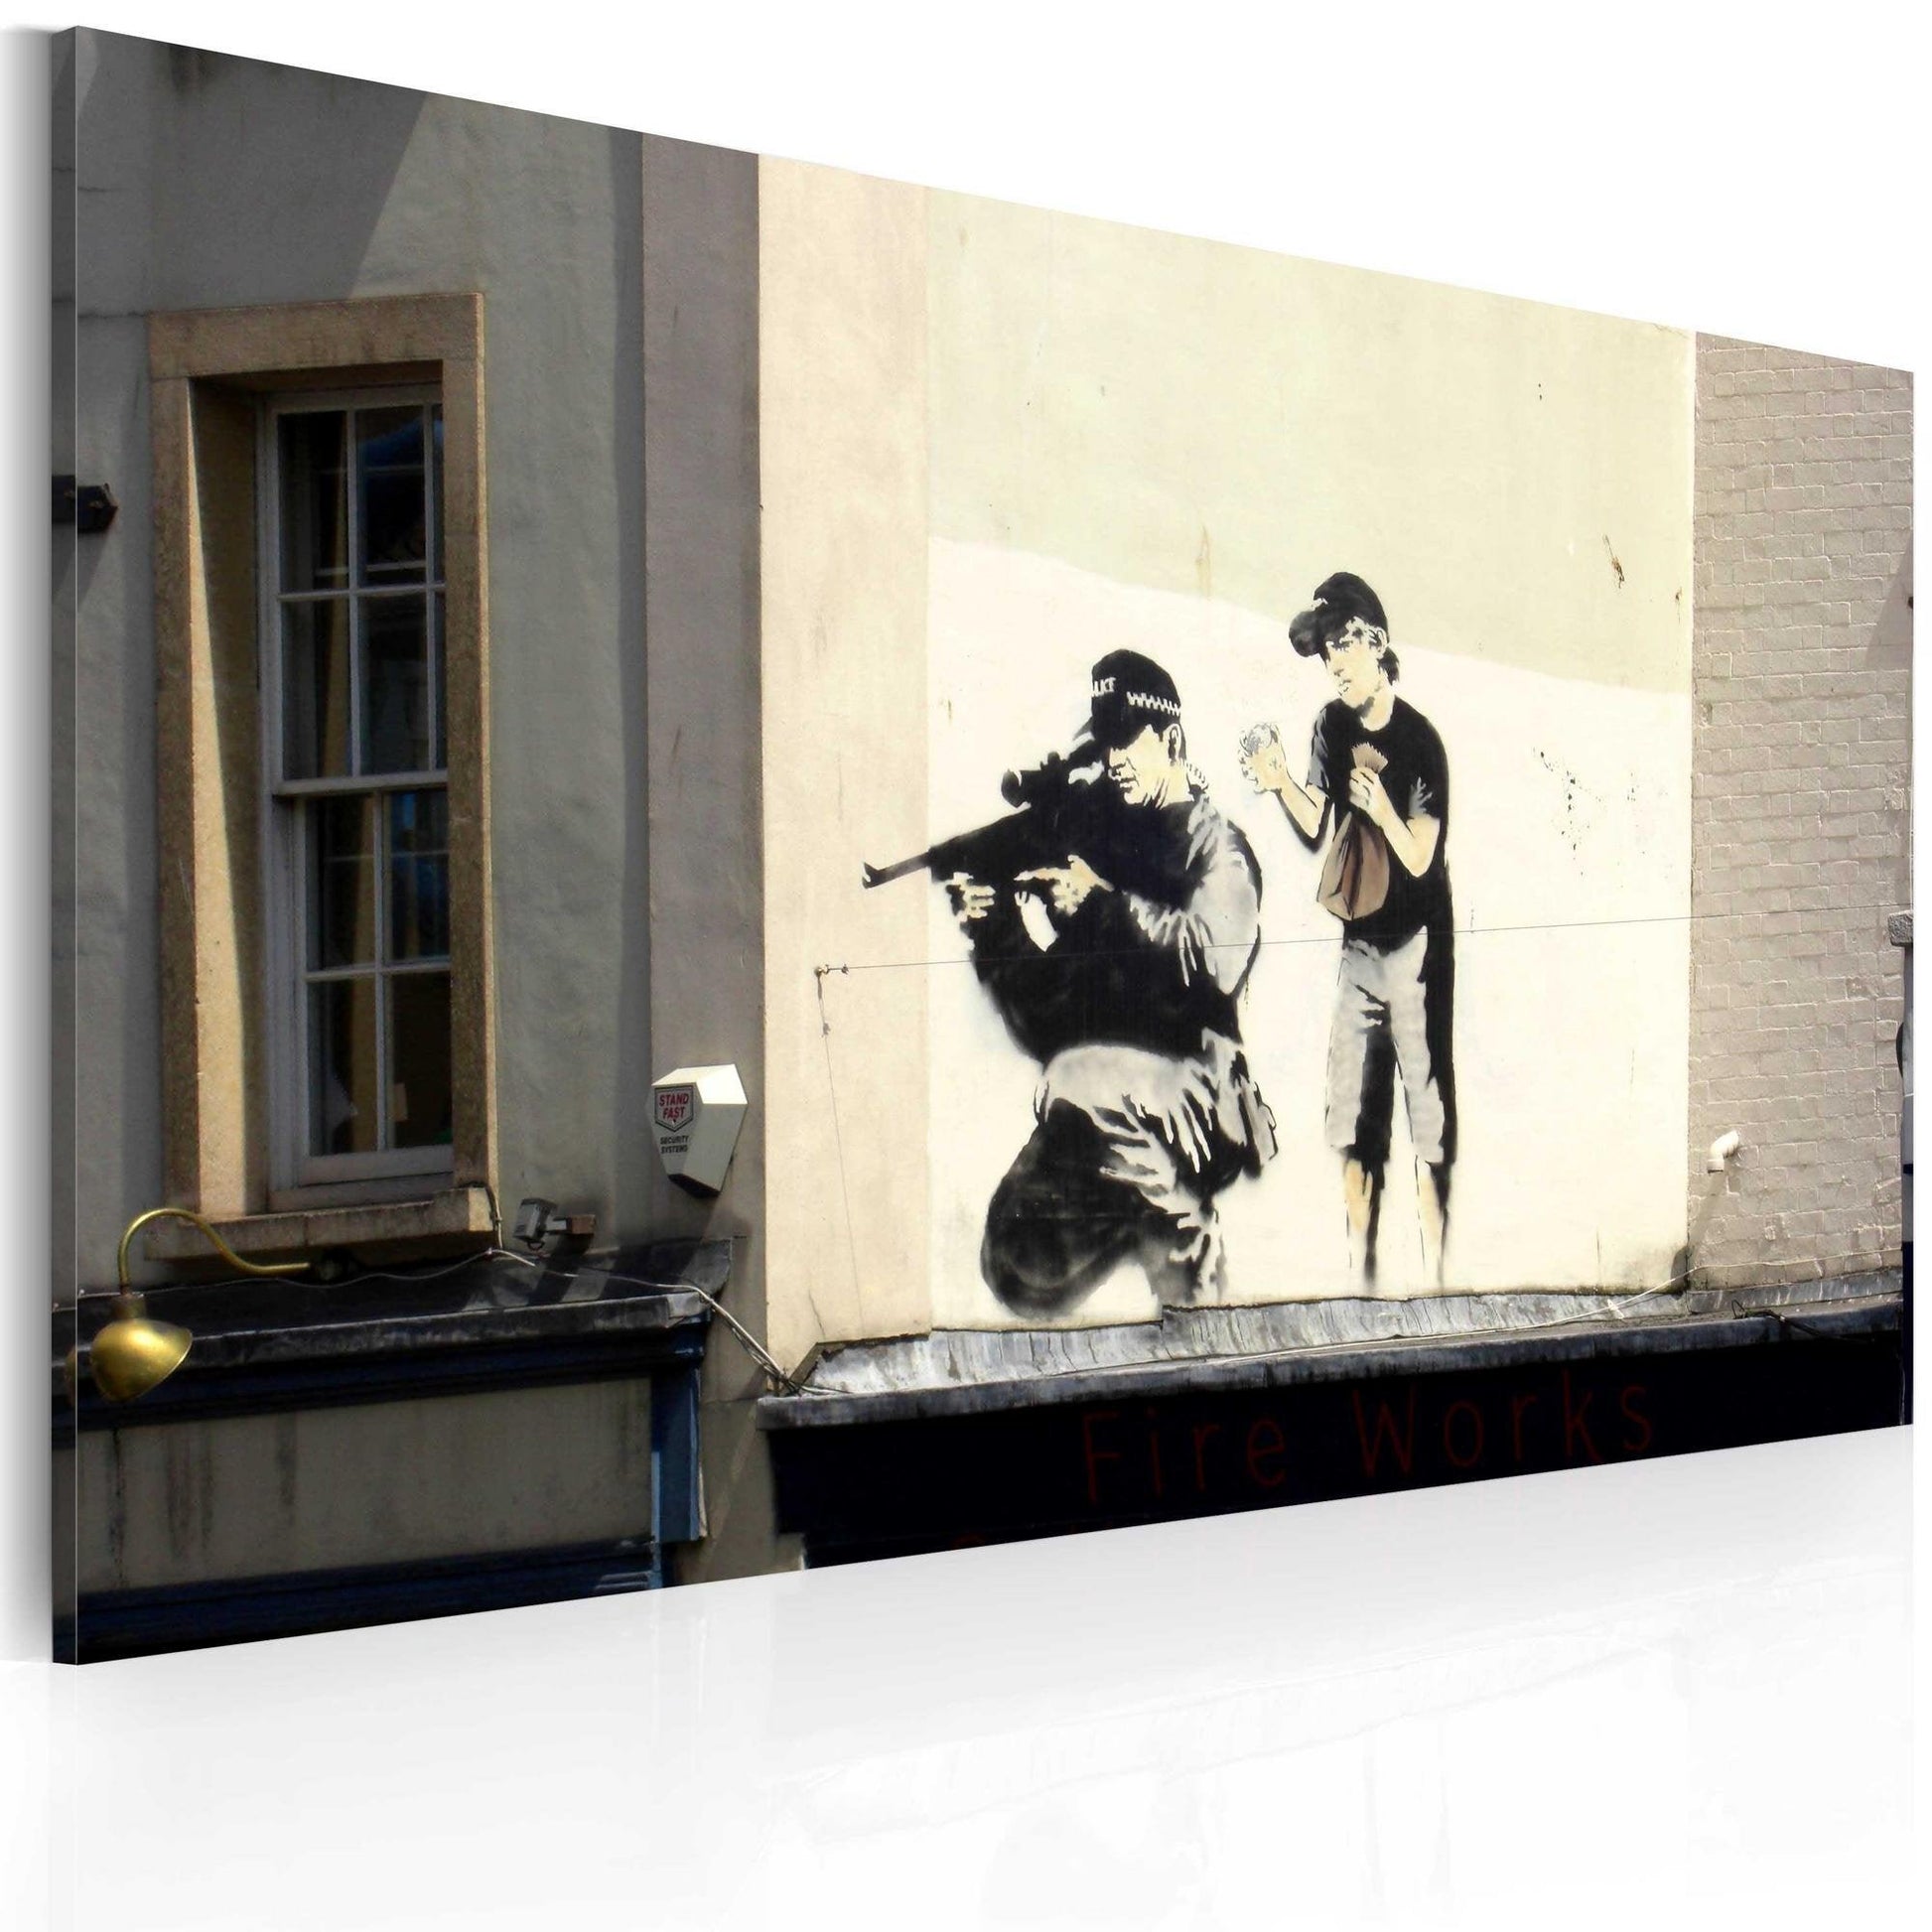 Canvas Print - Sniper and boy (Banksy) - www.trendingbestsellers.com